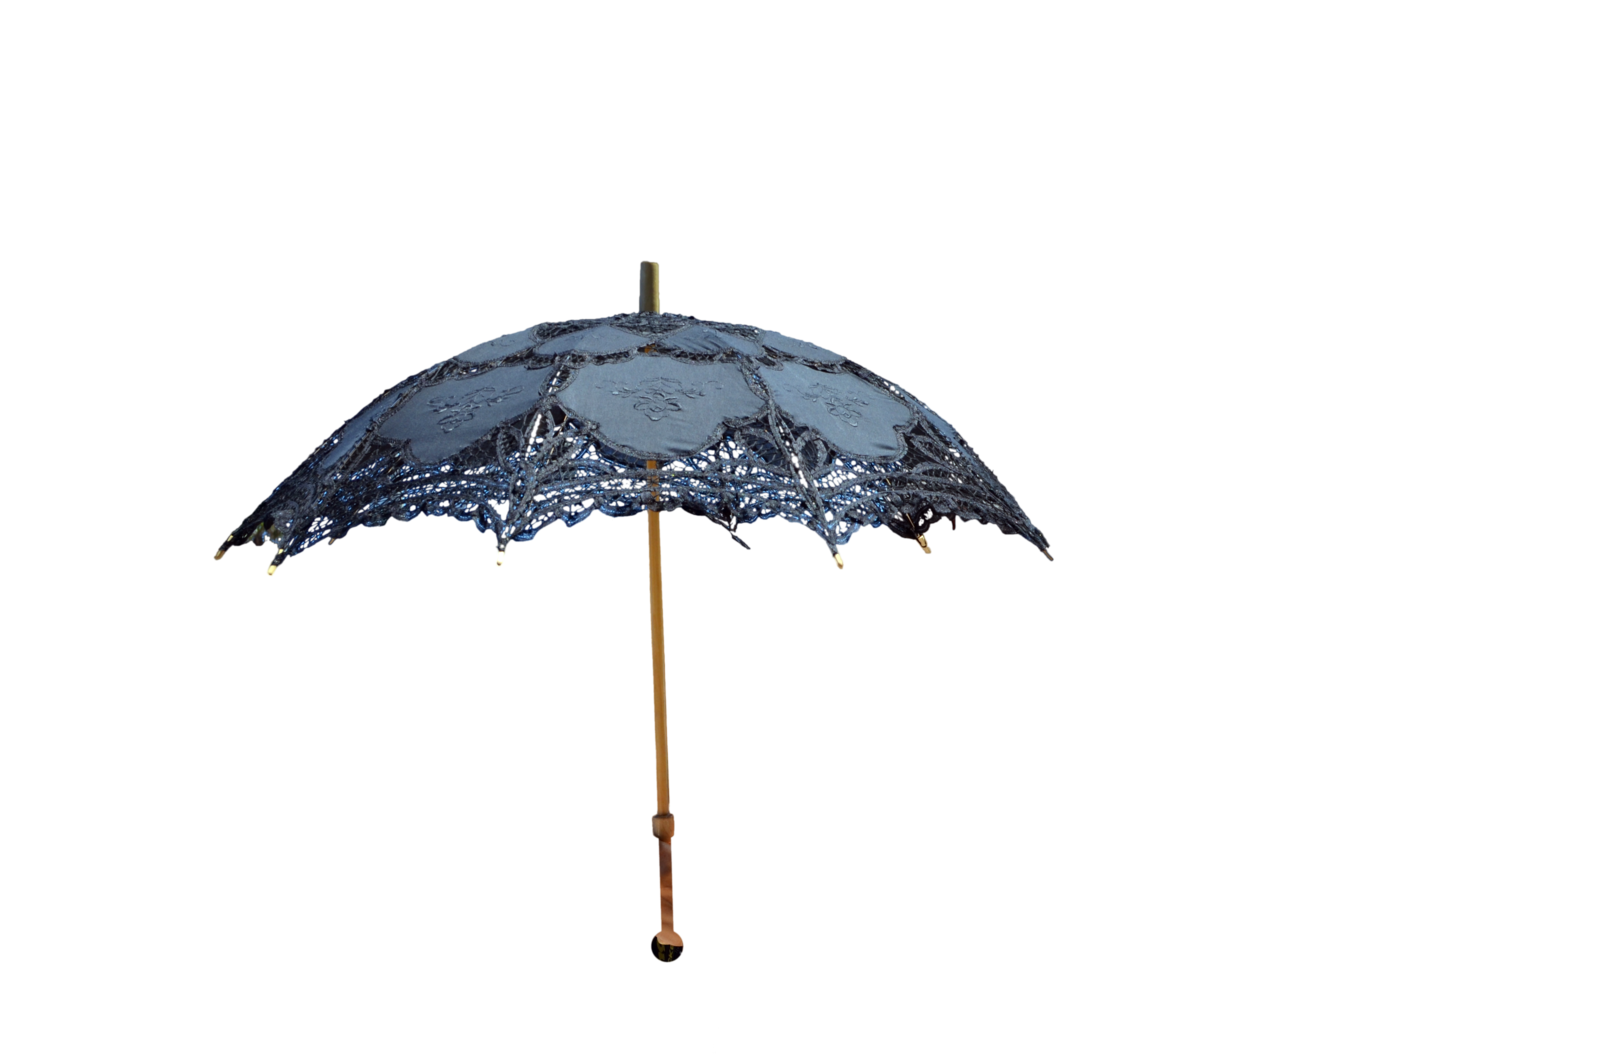 japanese clipart parasol